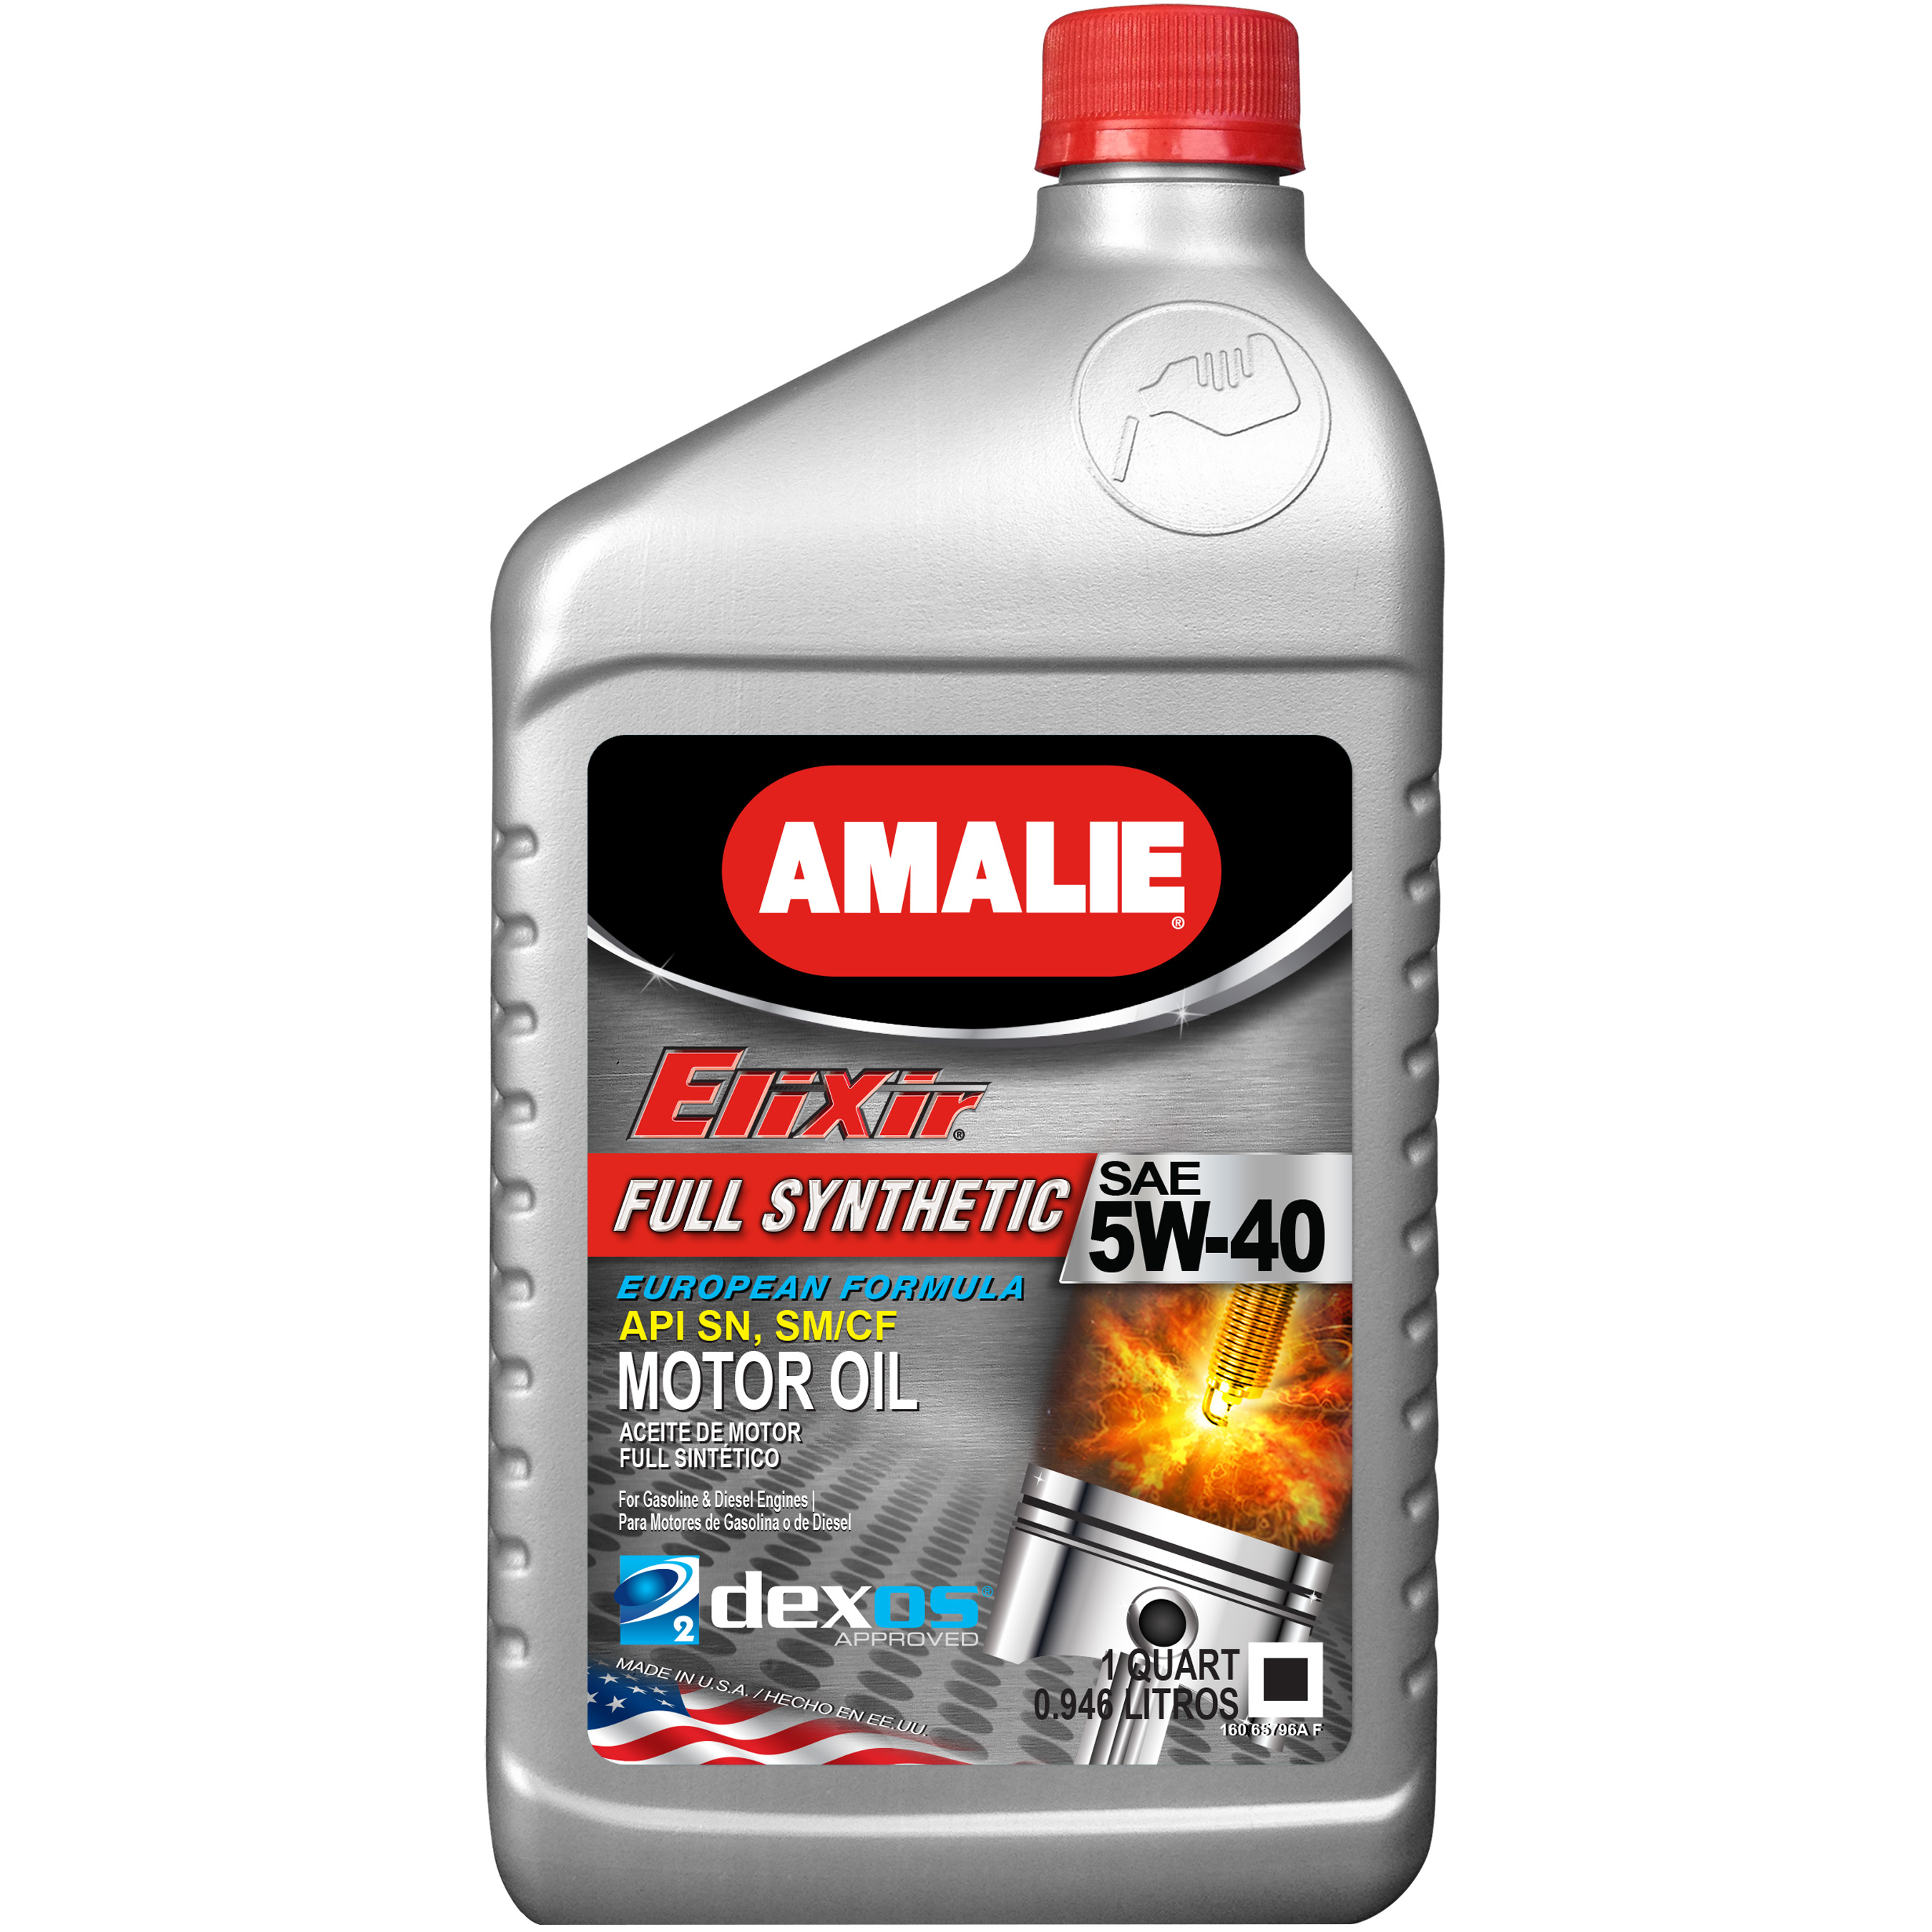 http://www.amalie.com/Passenger-Car-Motor-Oil/Elixir-Full-Synthetic/products/files//A39BD34BF72D/AMALIE_ELIXIR_5W40_dexos2_QT_FT[1].jpg